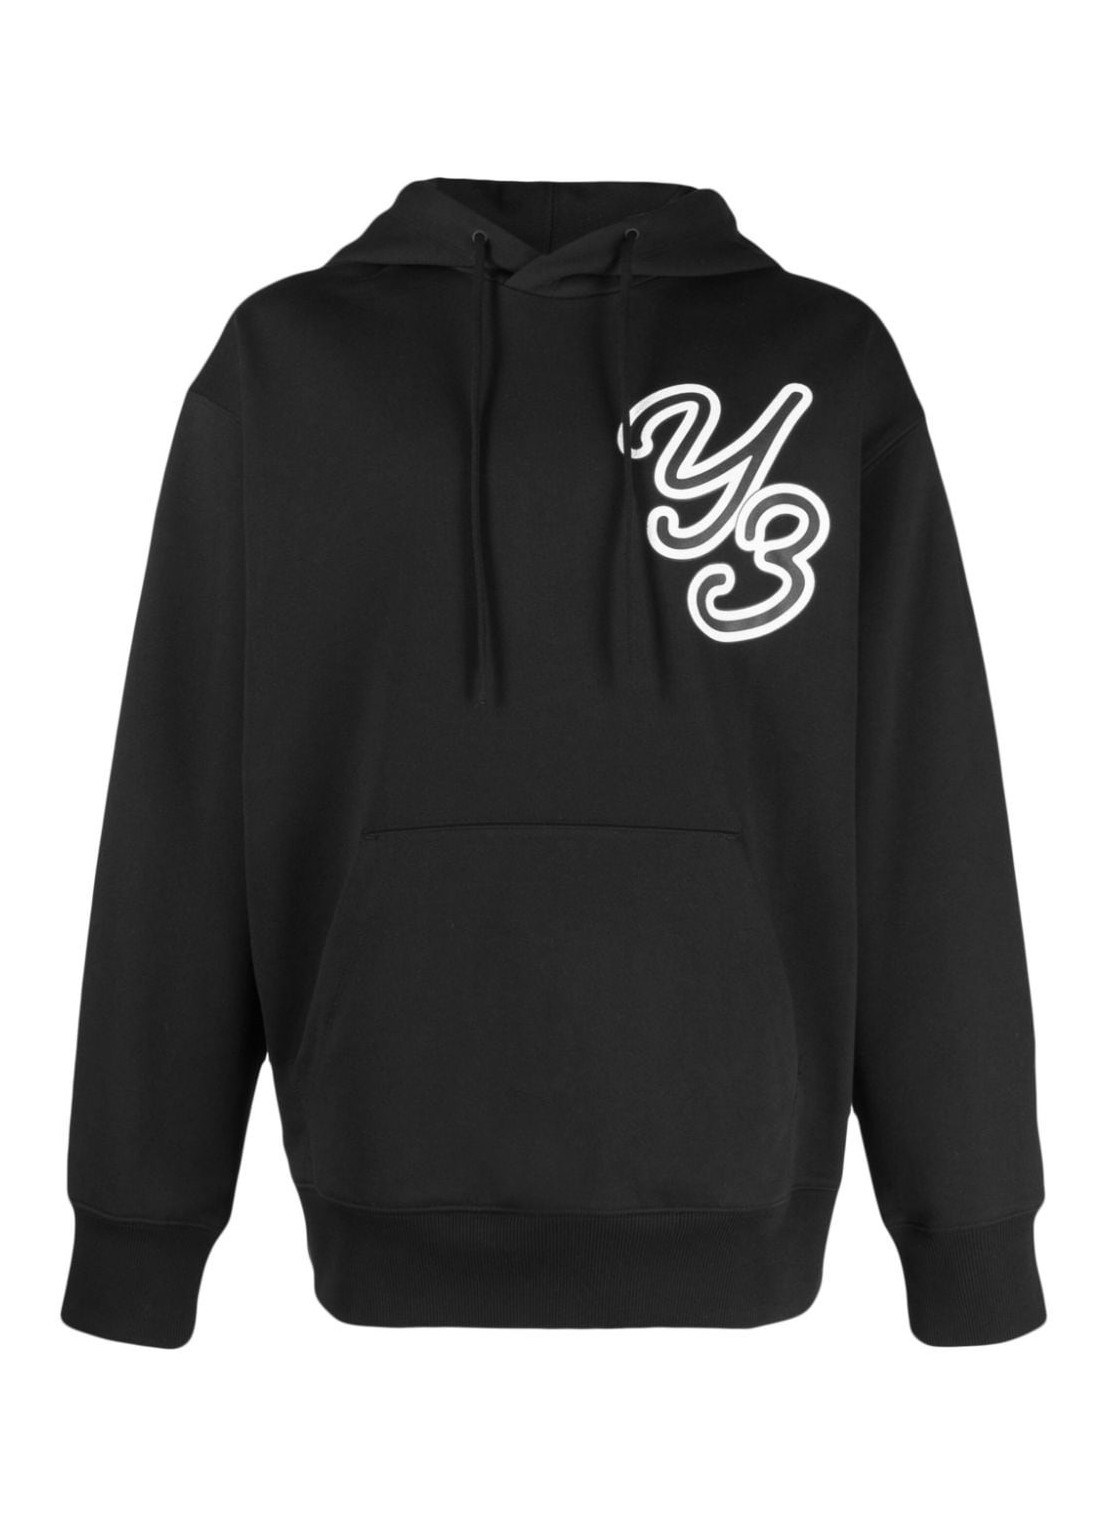 Sudadera y3 sweater man gfx hoodie it7523 black talla M
 